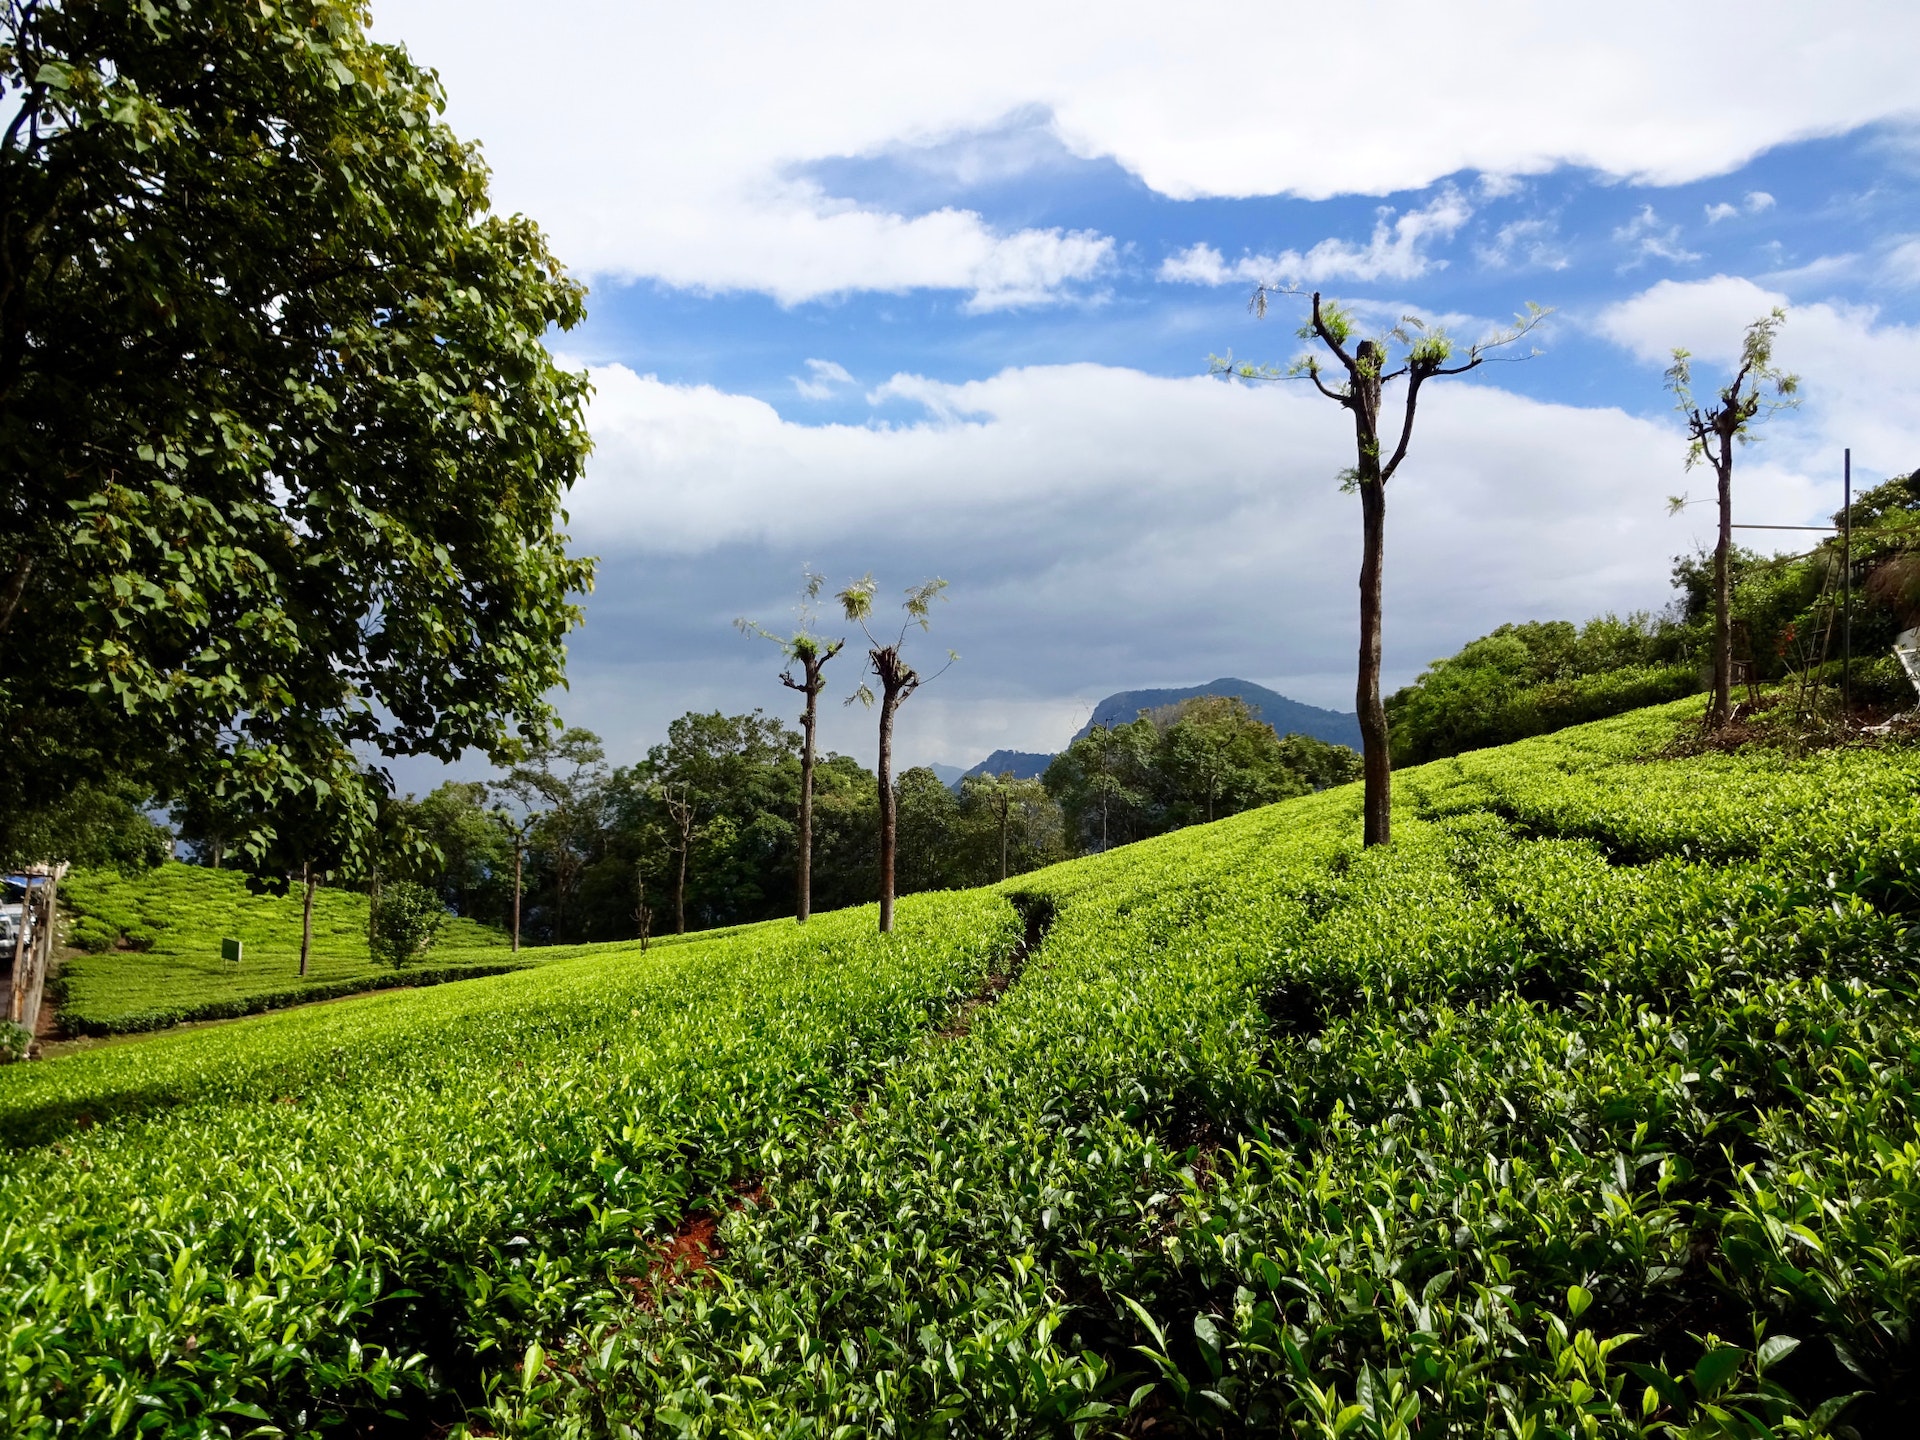 Tea plantations around Lamb’s Rock viewpoint near Coonoor